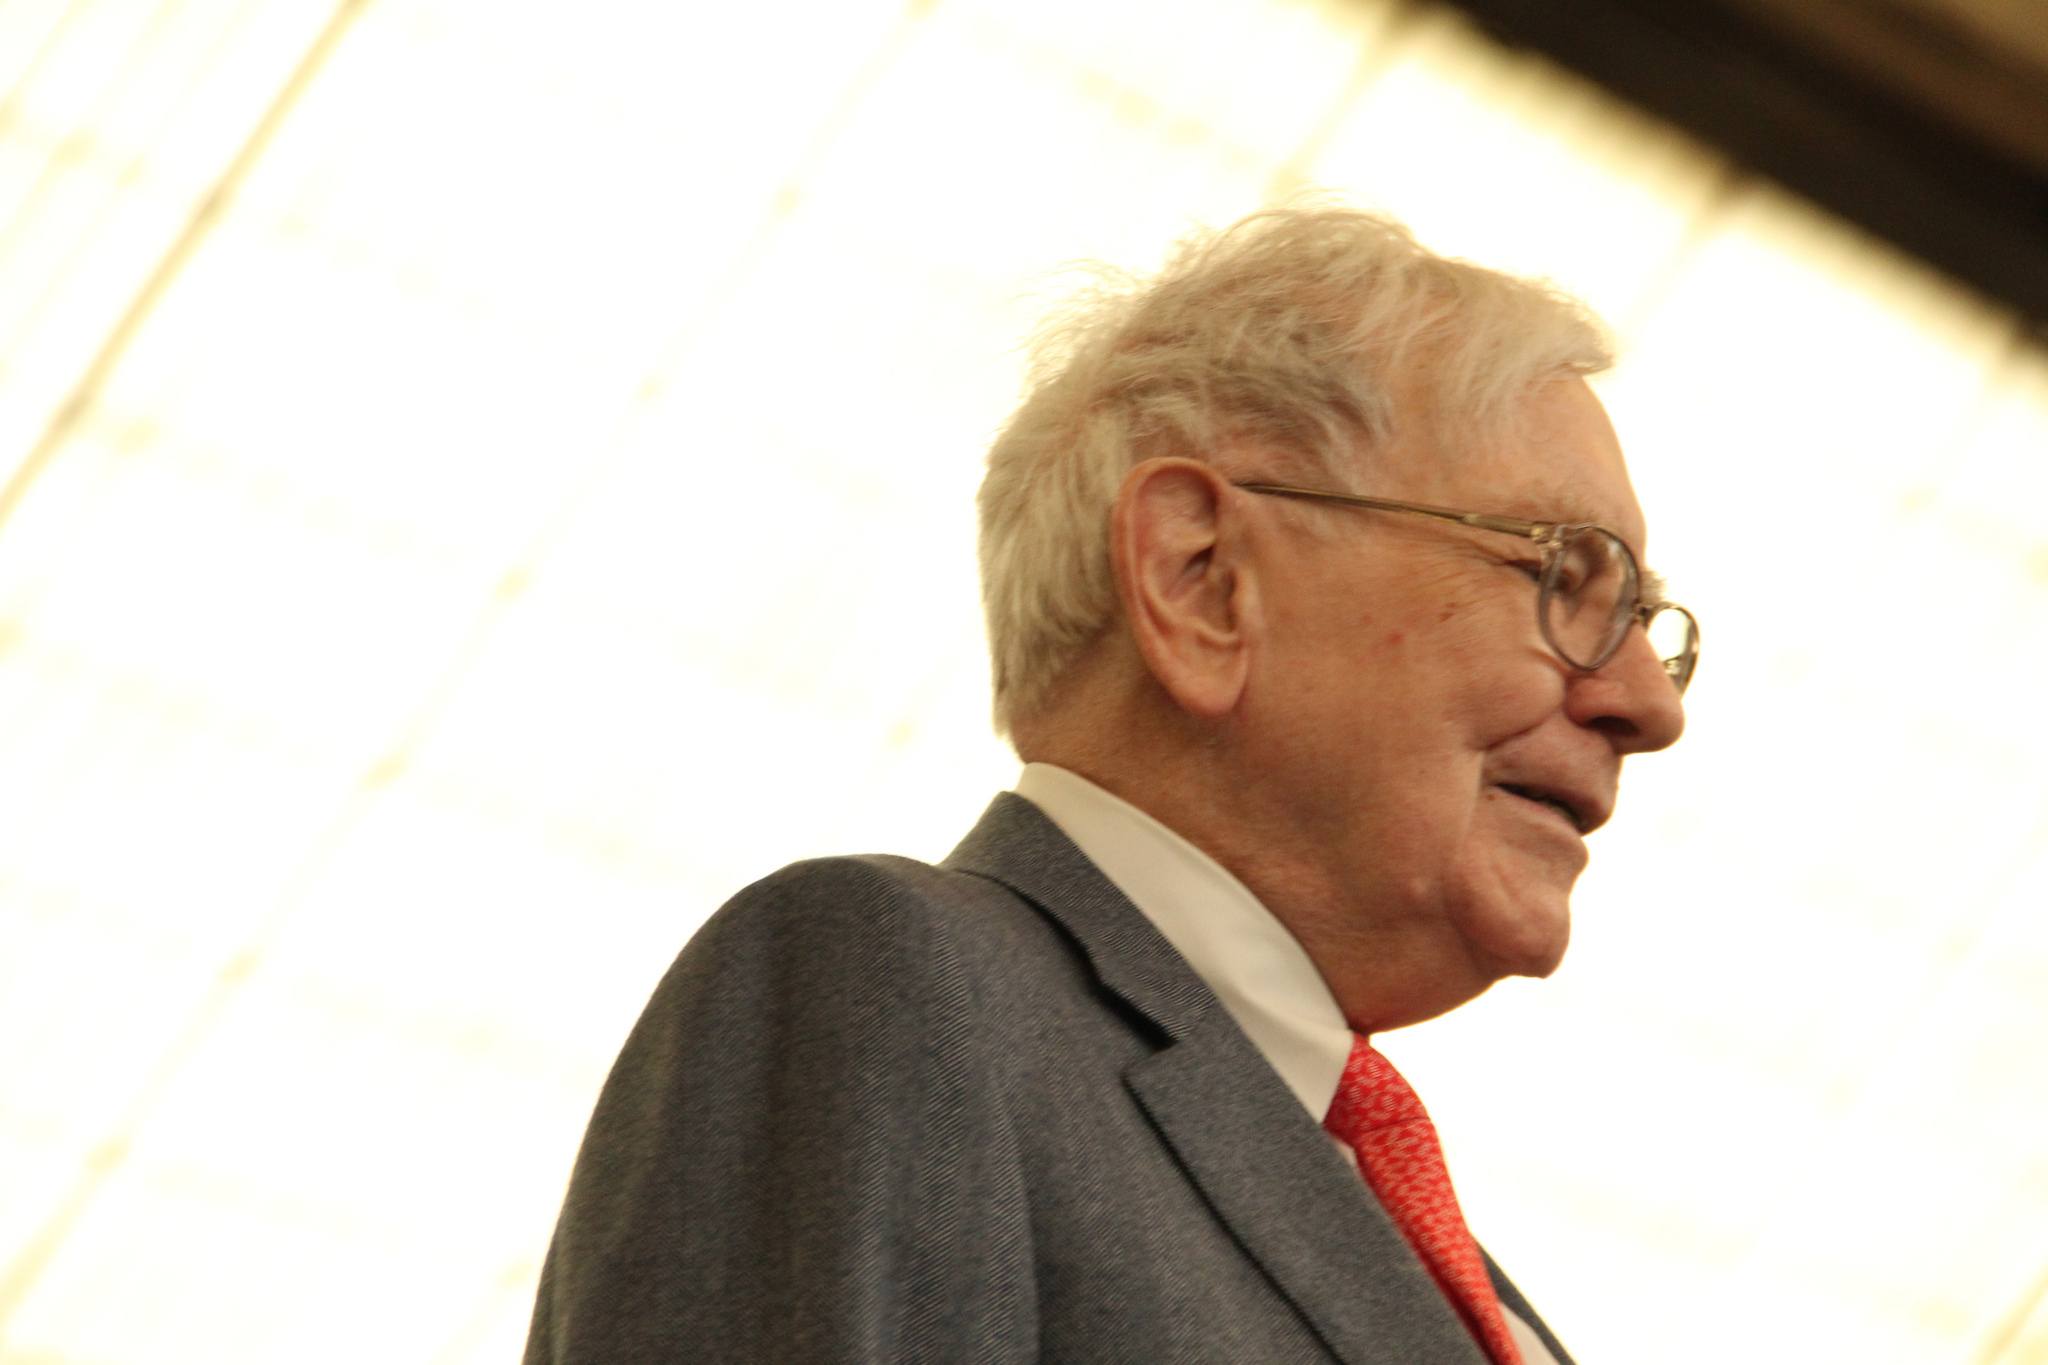 8 Things Warren Buffett Did To Make $53,000 By Age 16